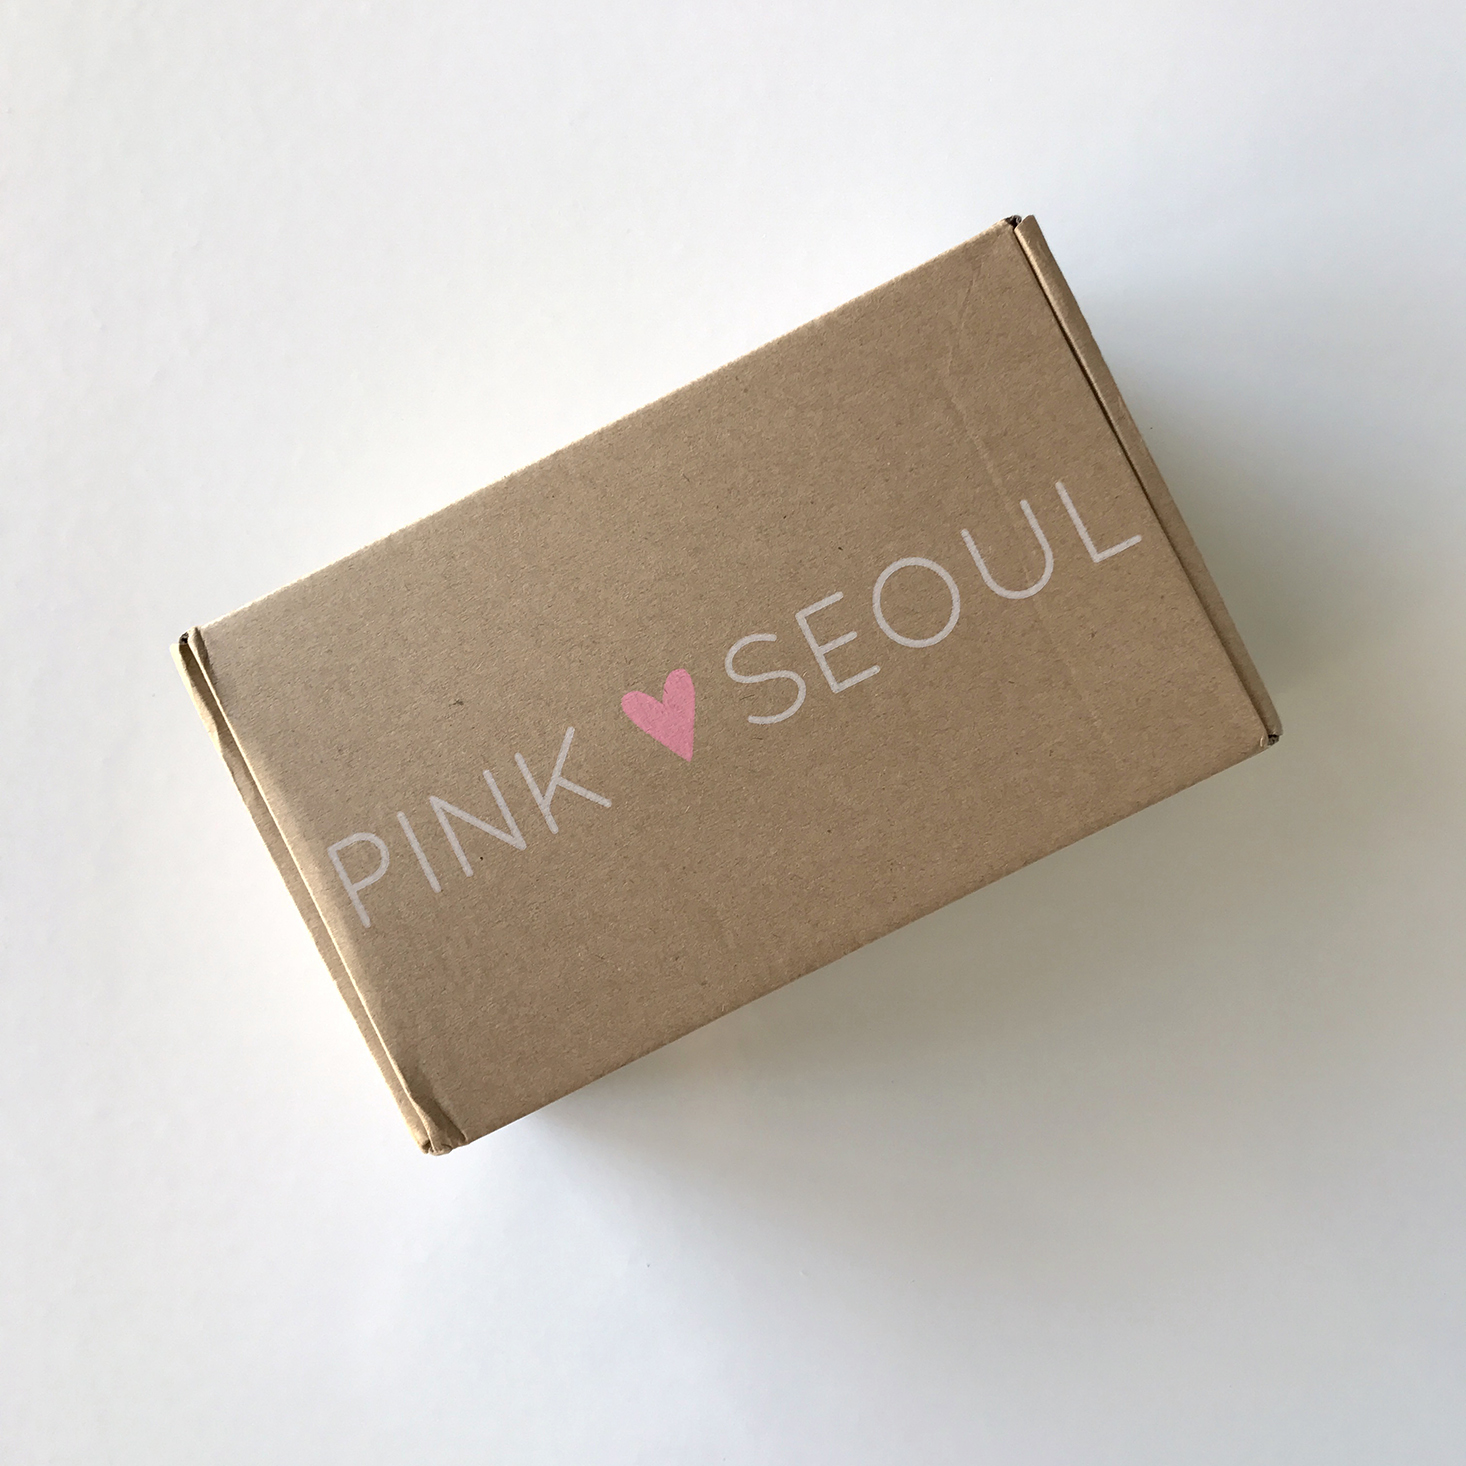 PinkSeoul Plus Box Review + Coupon- March/April 2017